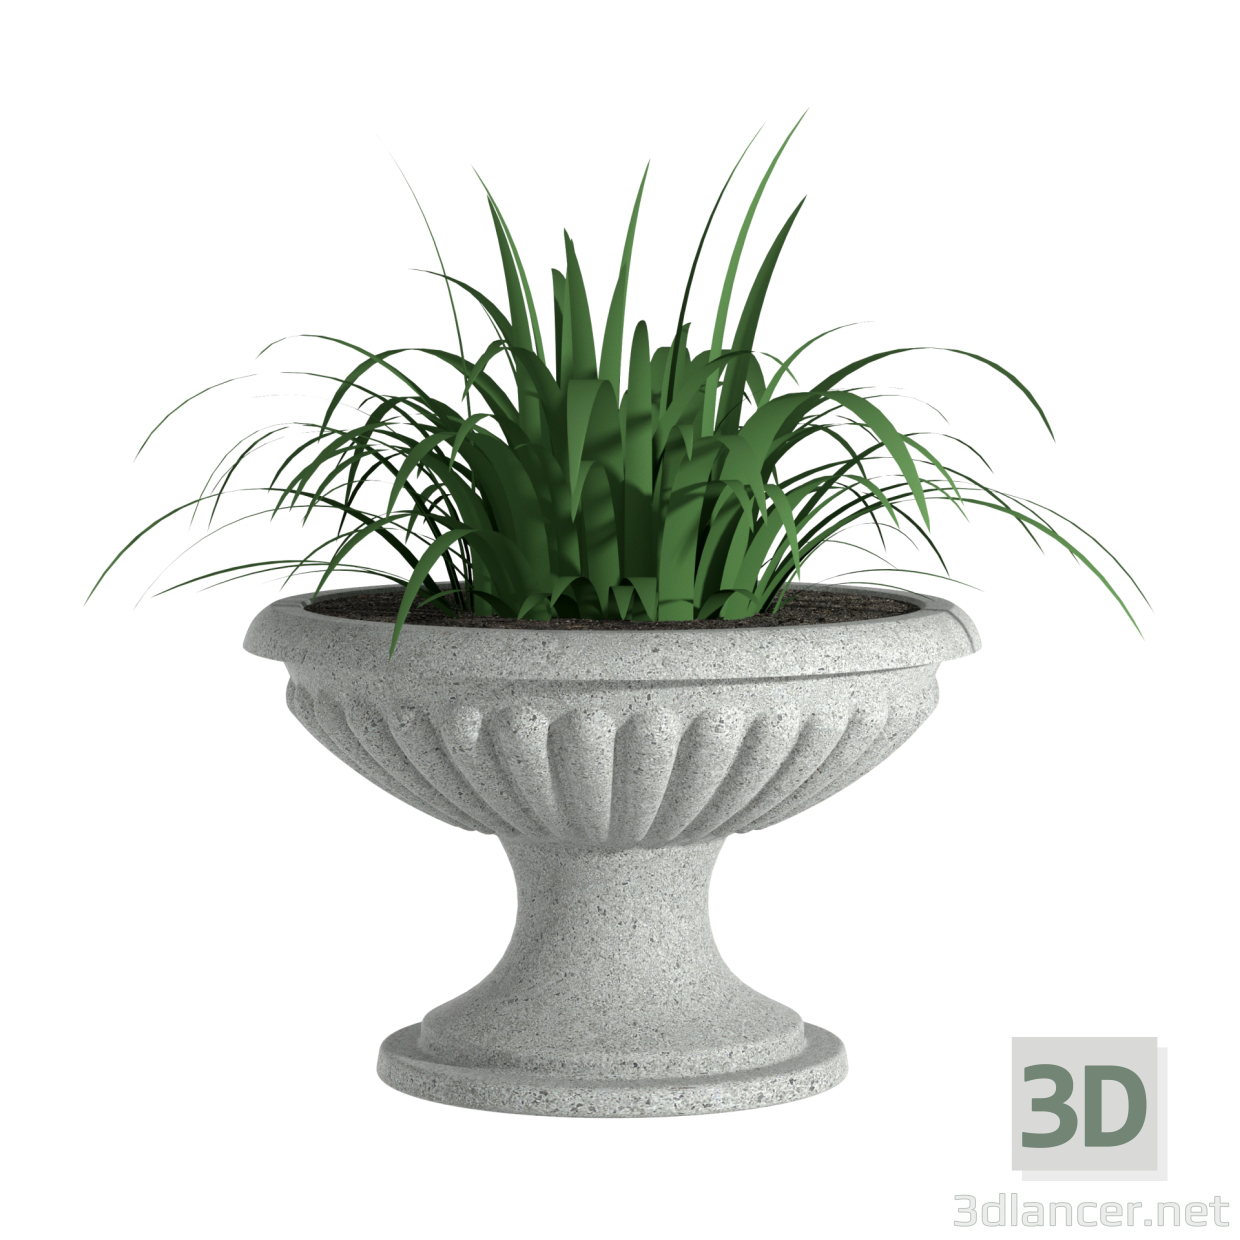 Blumentopf B15 3D-Modell kaufen - Rendern